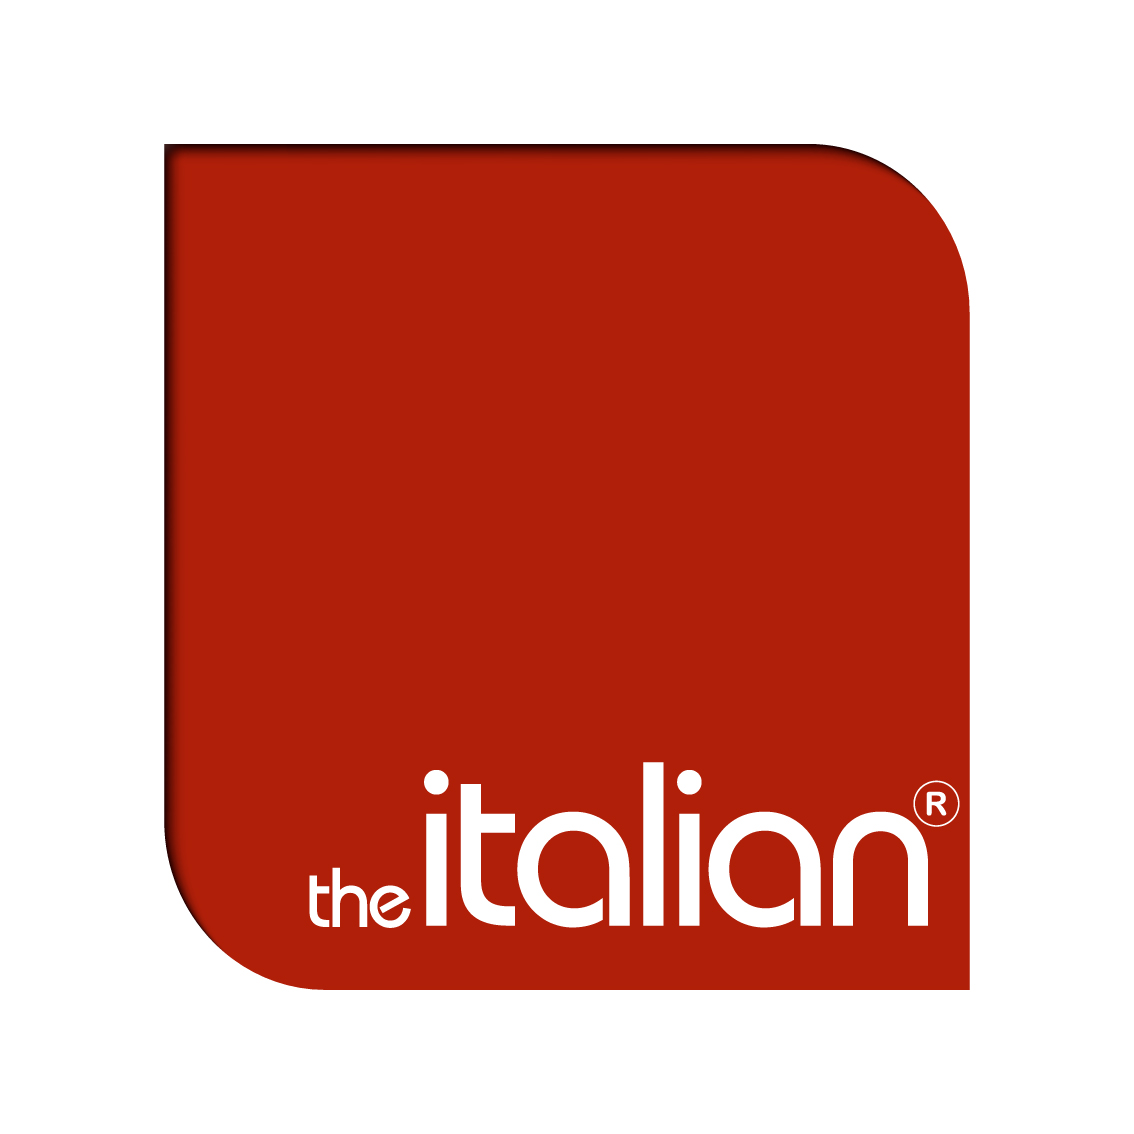 the italian